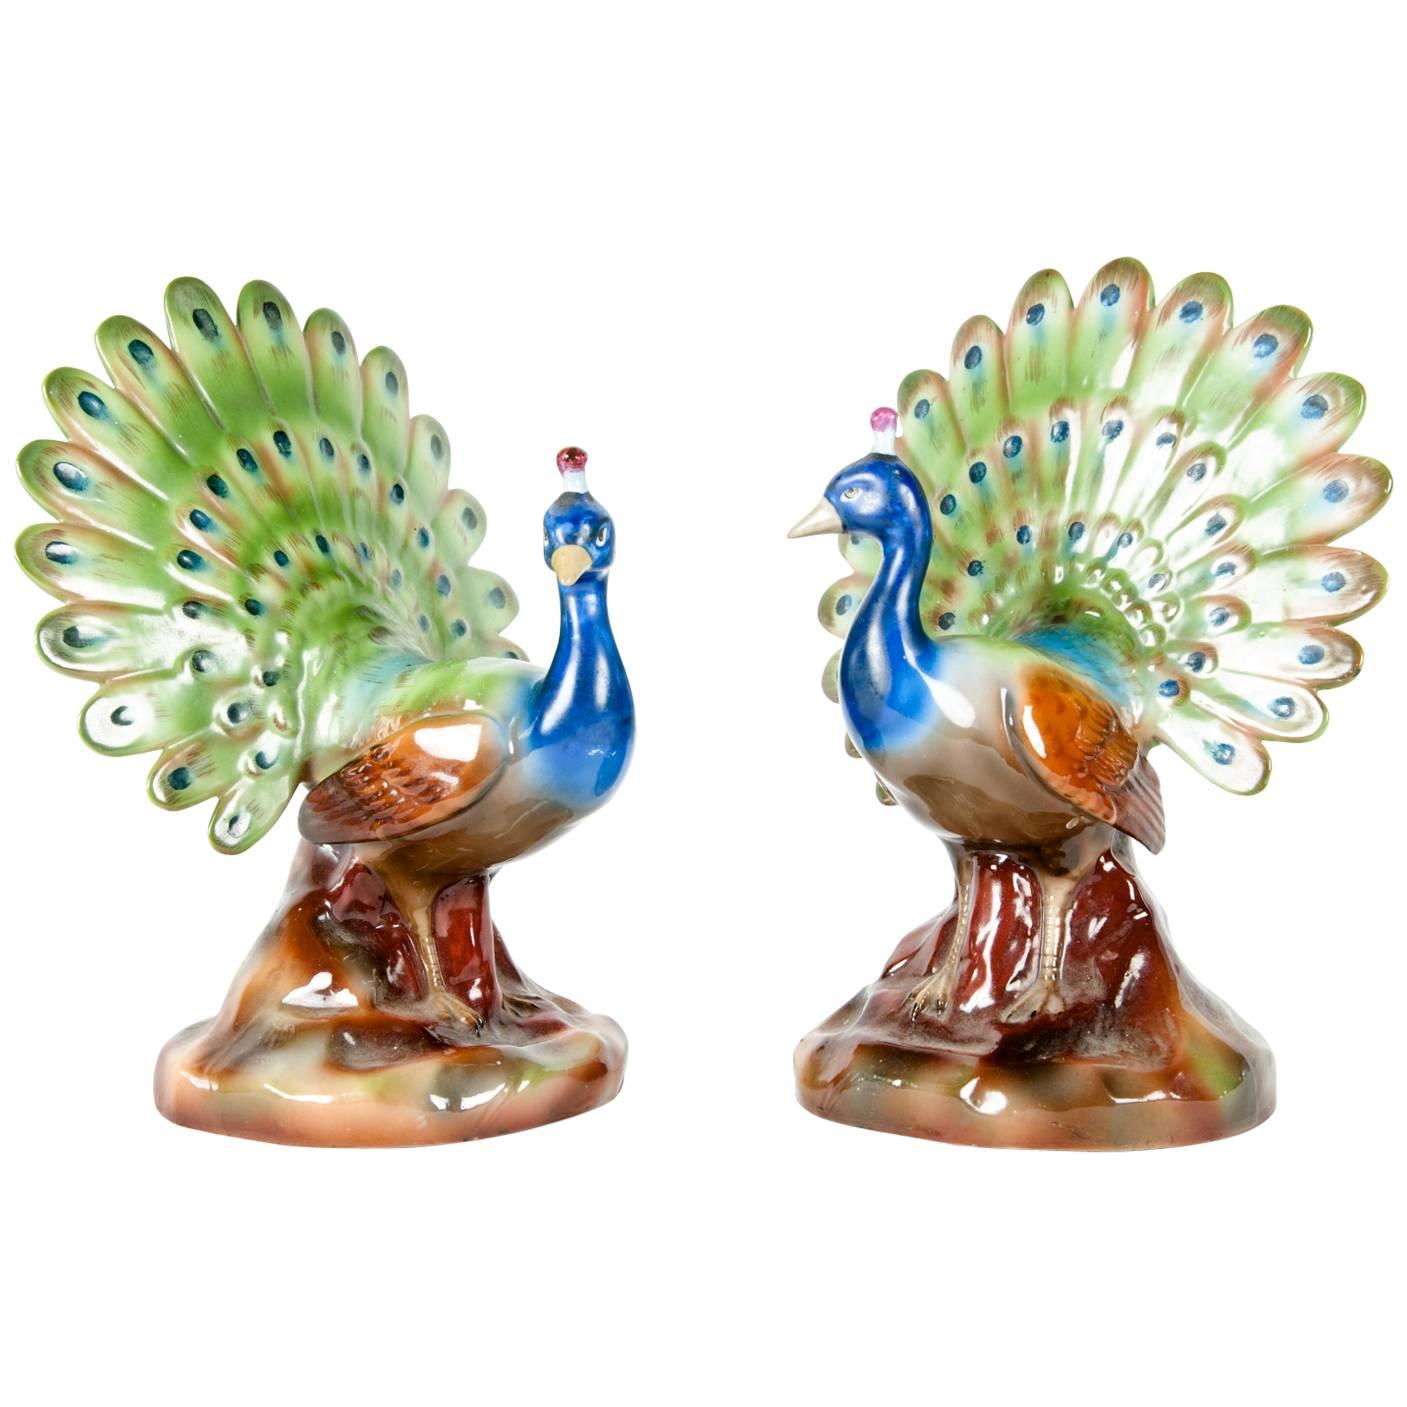 Antique European Pair of Decorative Glazed Porcelain Peacock